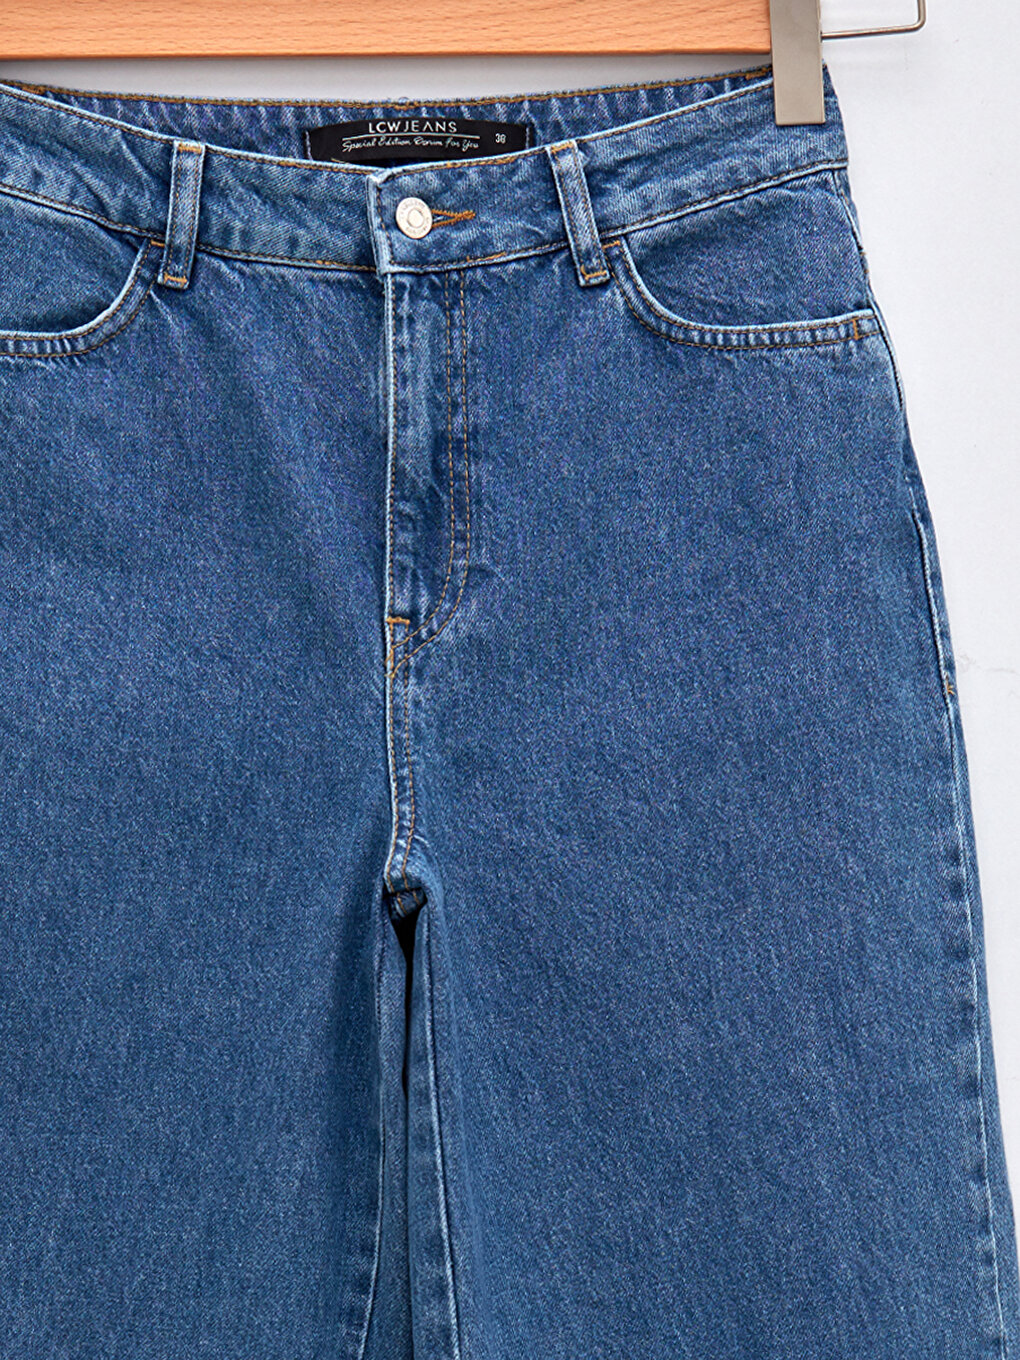 Standard Fit Pocket Detailed Women's Rodeo Jeans -S29126Z8-H45 ...